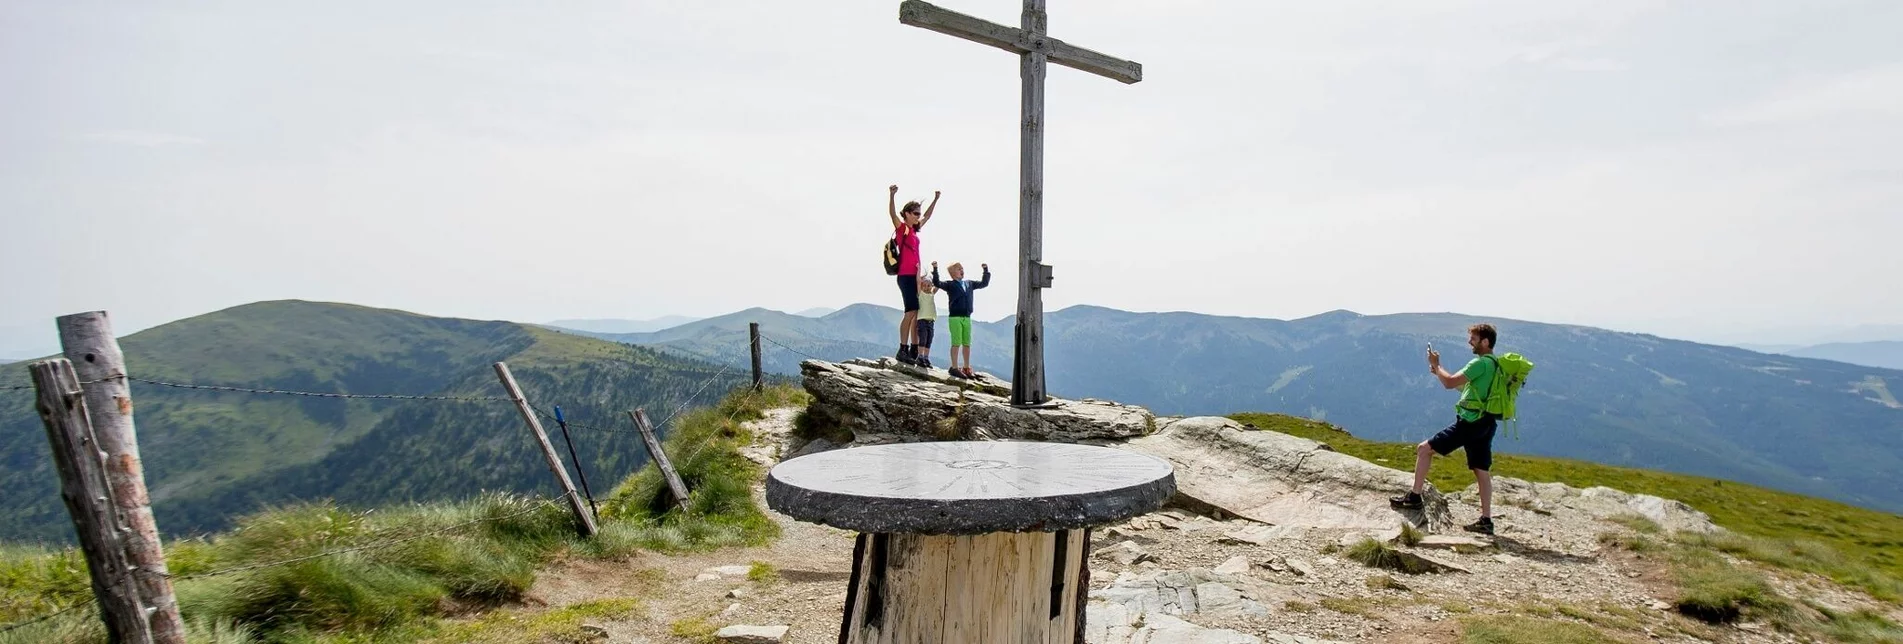 Hiking route St. Lorenzen - Frauenalpe - Touren-Impression #1 | © Tourismusverband Region Murau